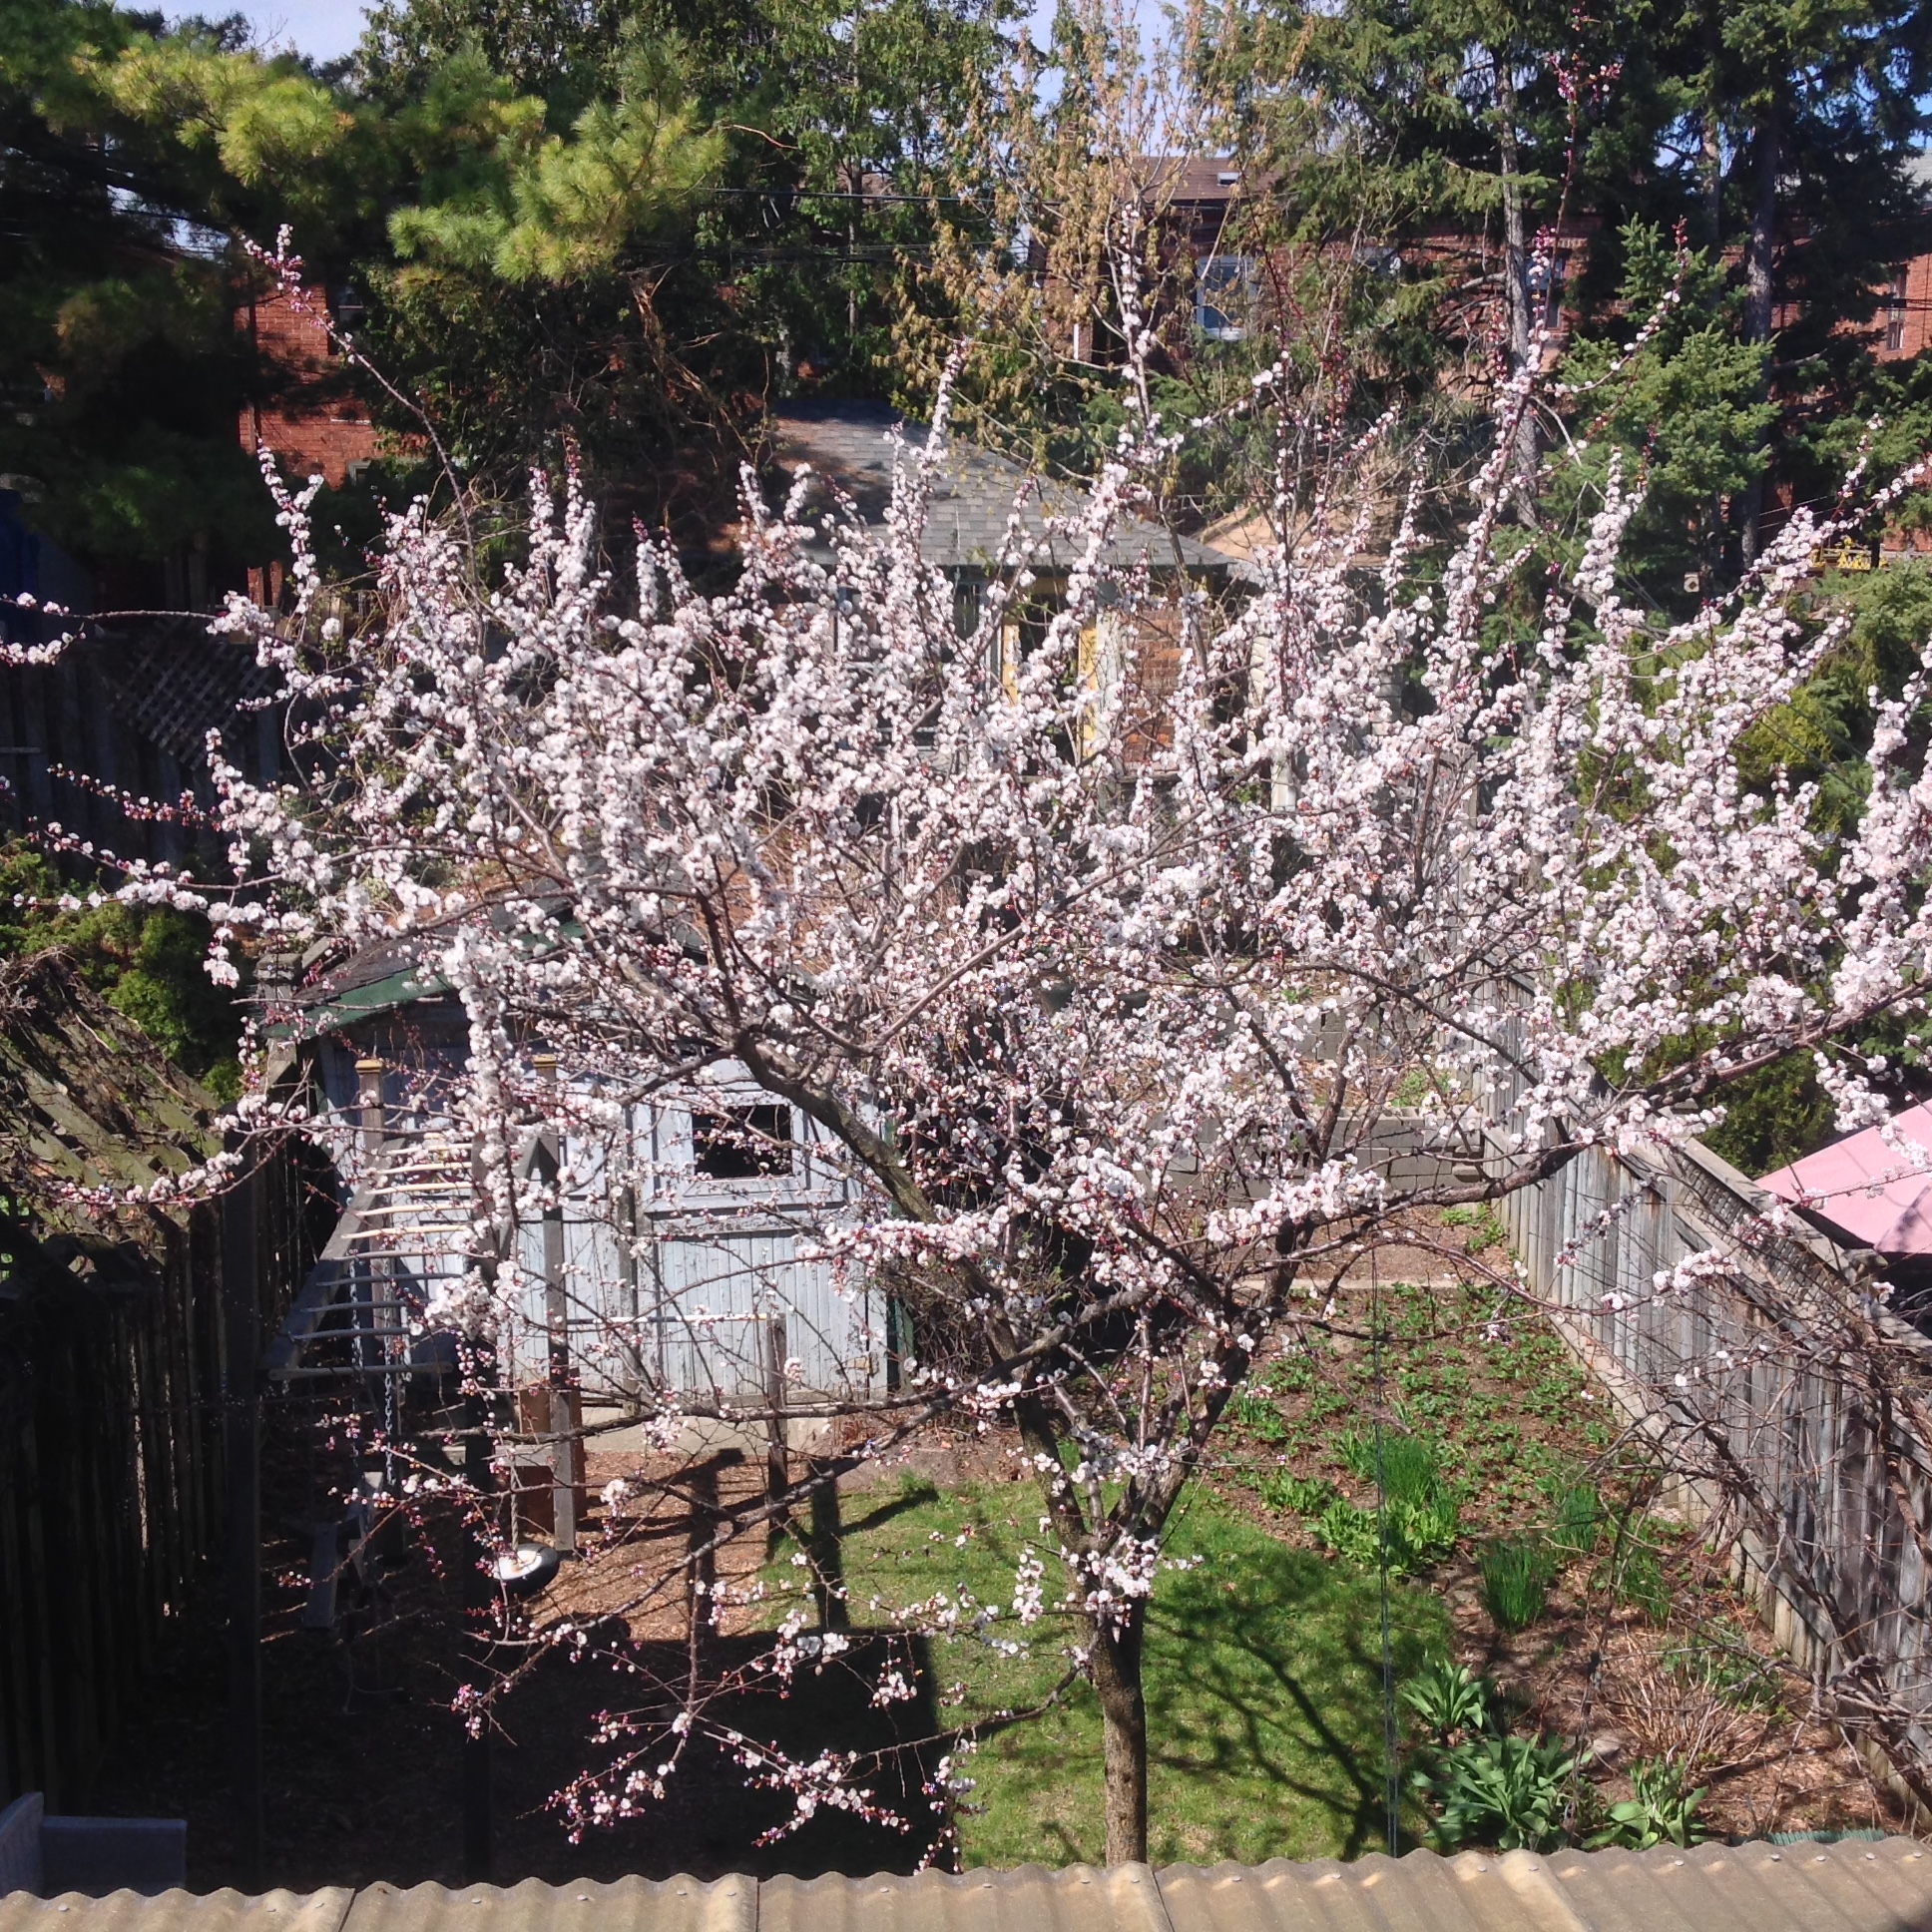 Apricot in bloom in my backyard